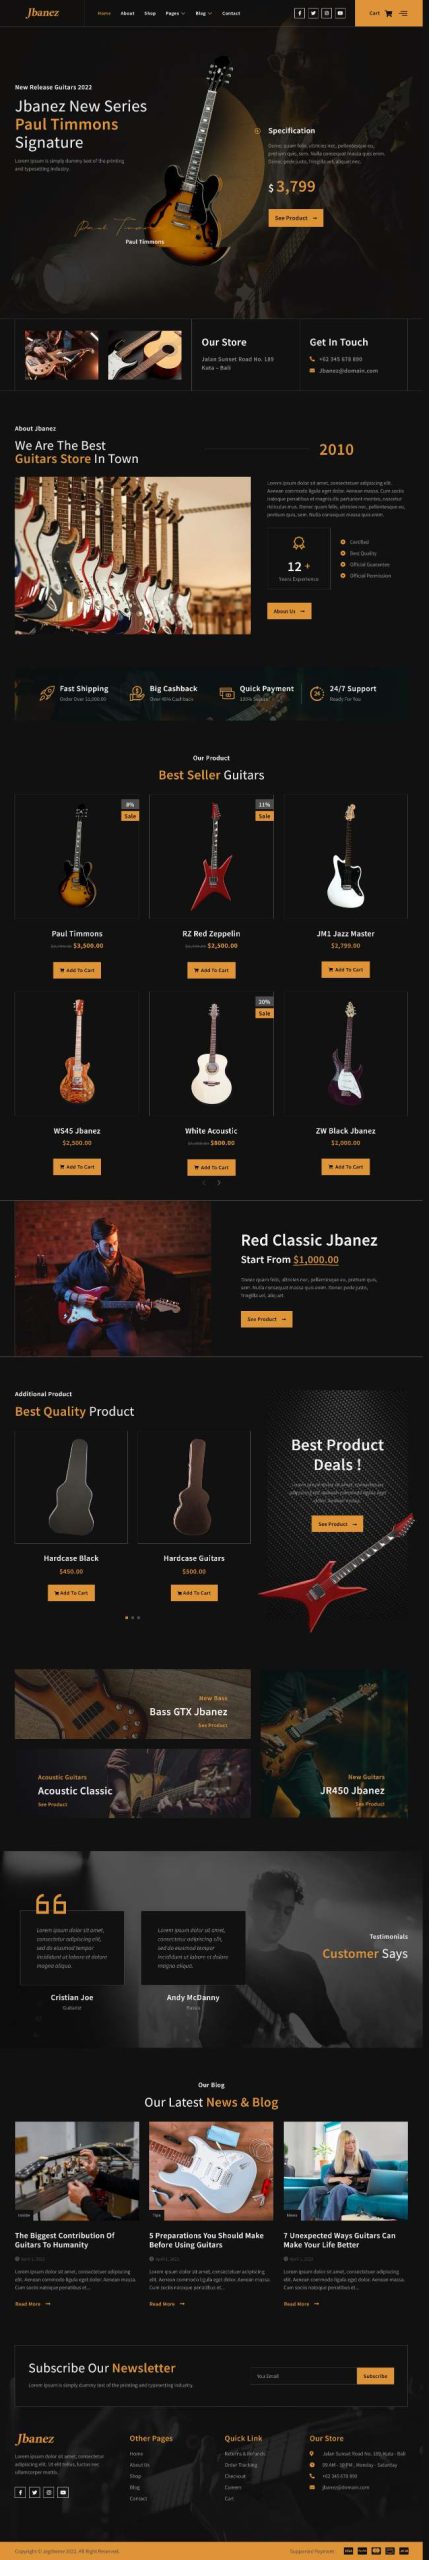 Jbanez – Guitar & Music Equipment Store Elementor Template Kit by Jeg